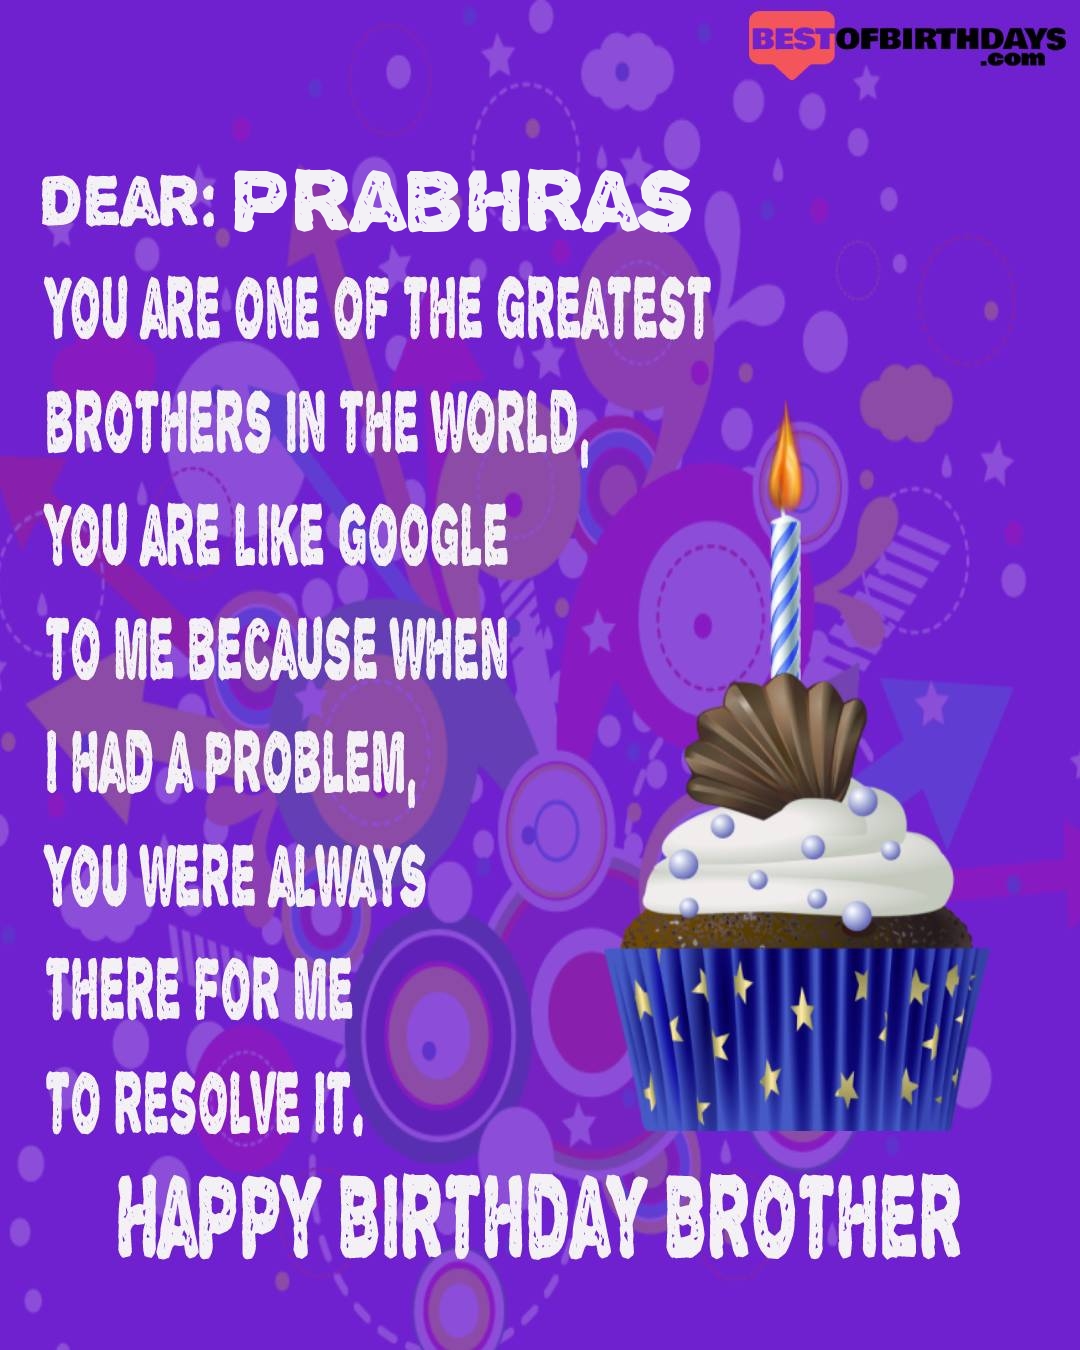 Happy birthday prabhras bhai brother bro